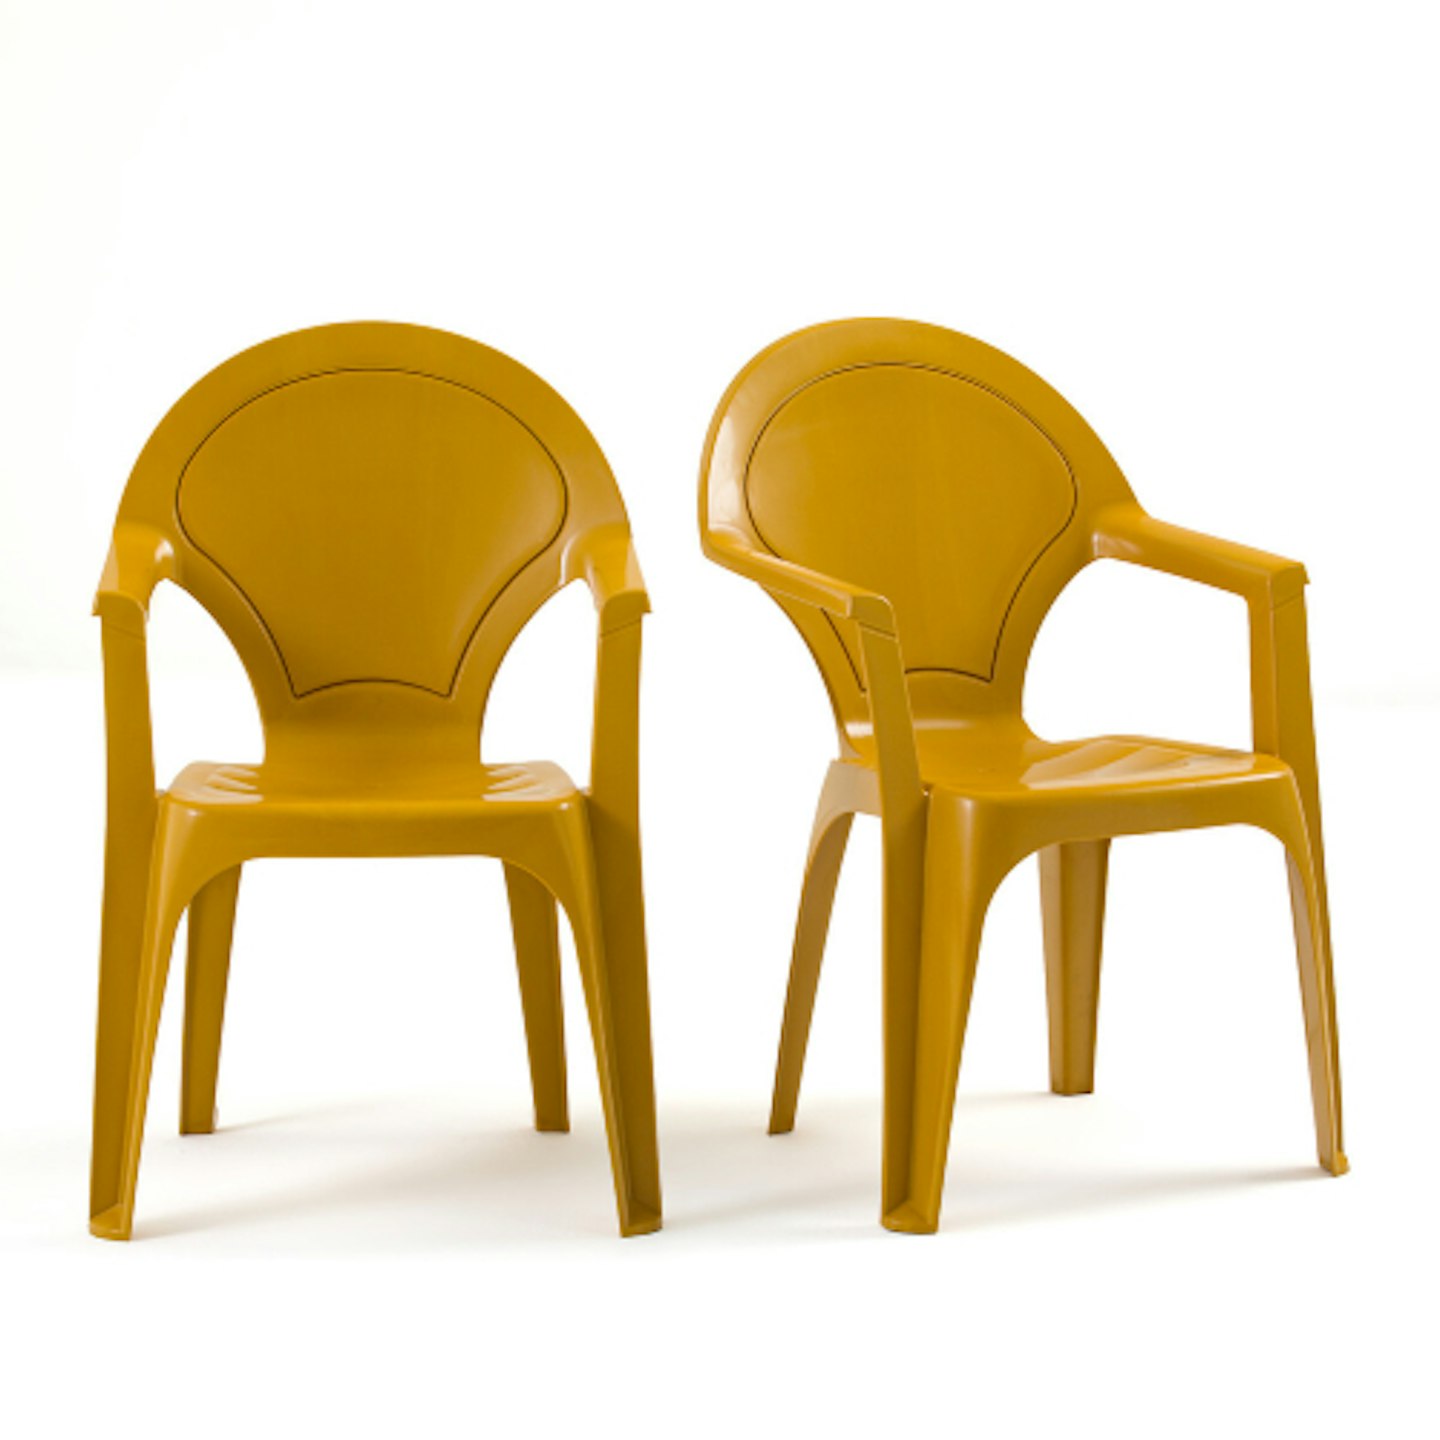 Adali plastic garden chairs 